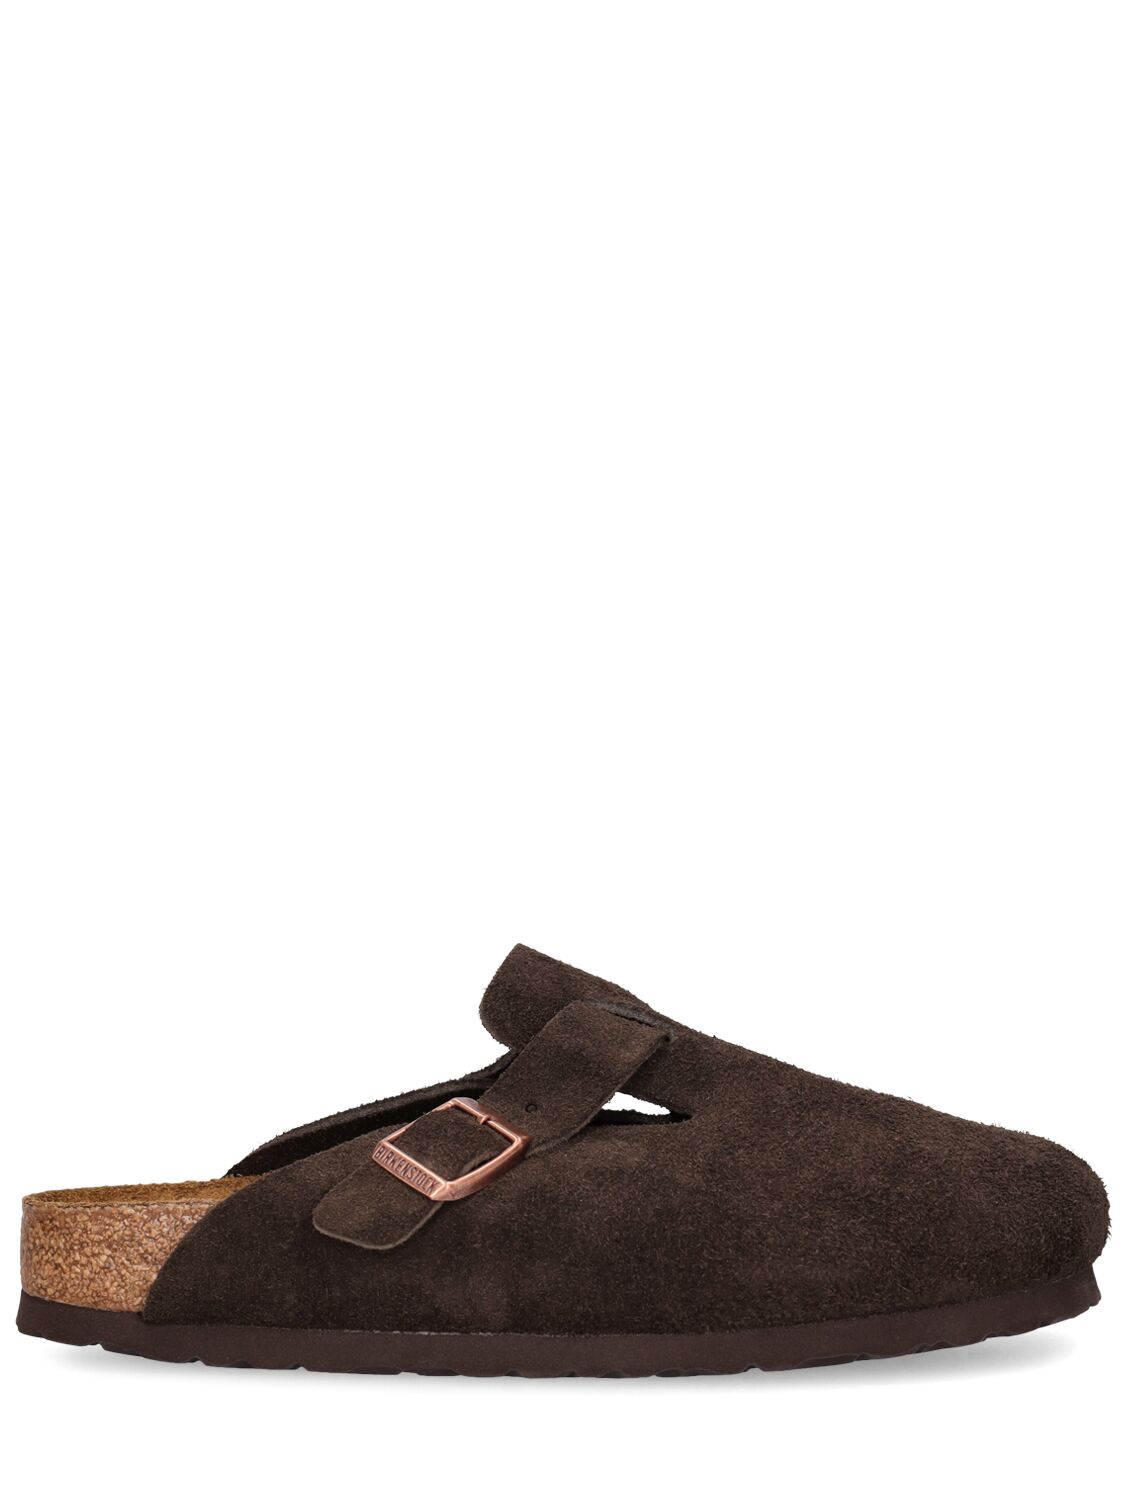 Birkenstock Boston Soft Suede Sandals In Brown